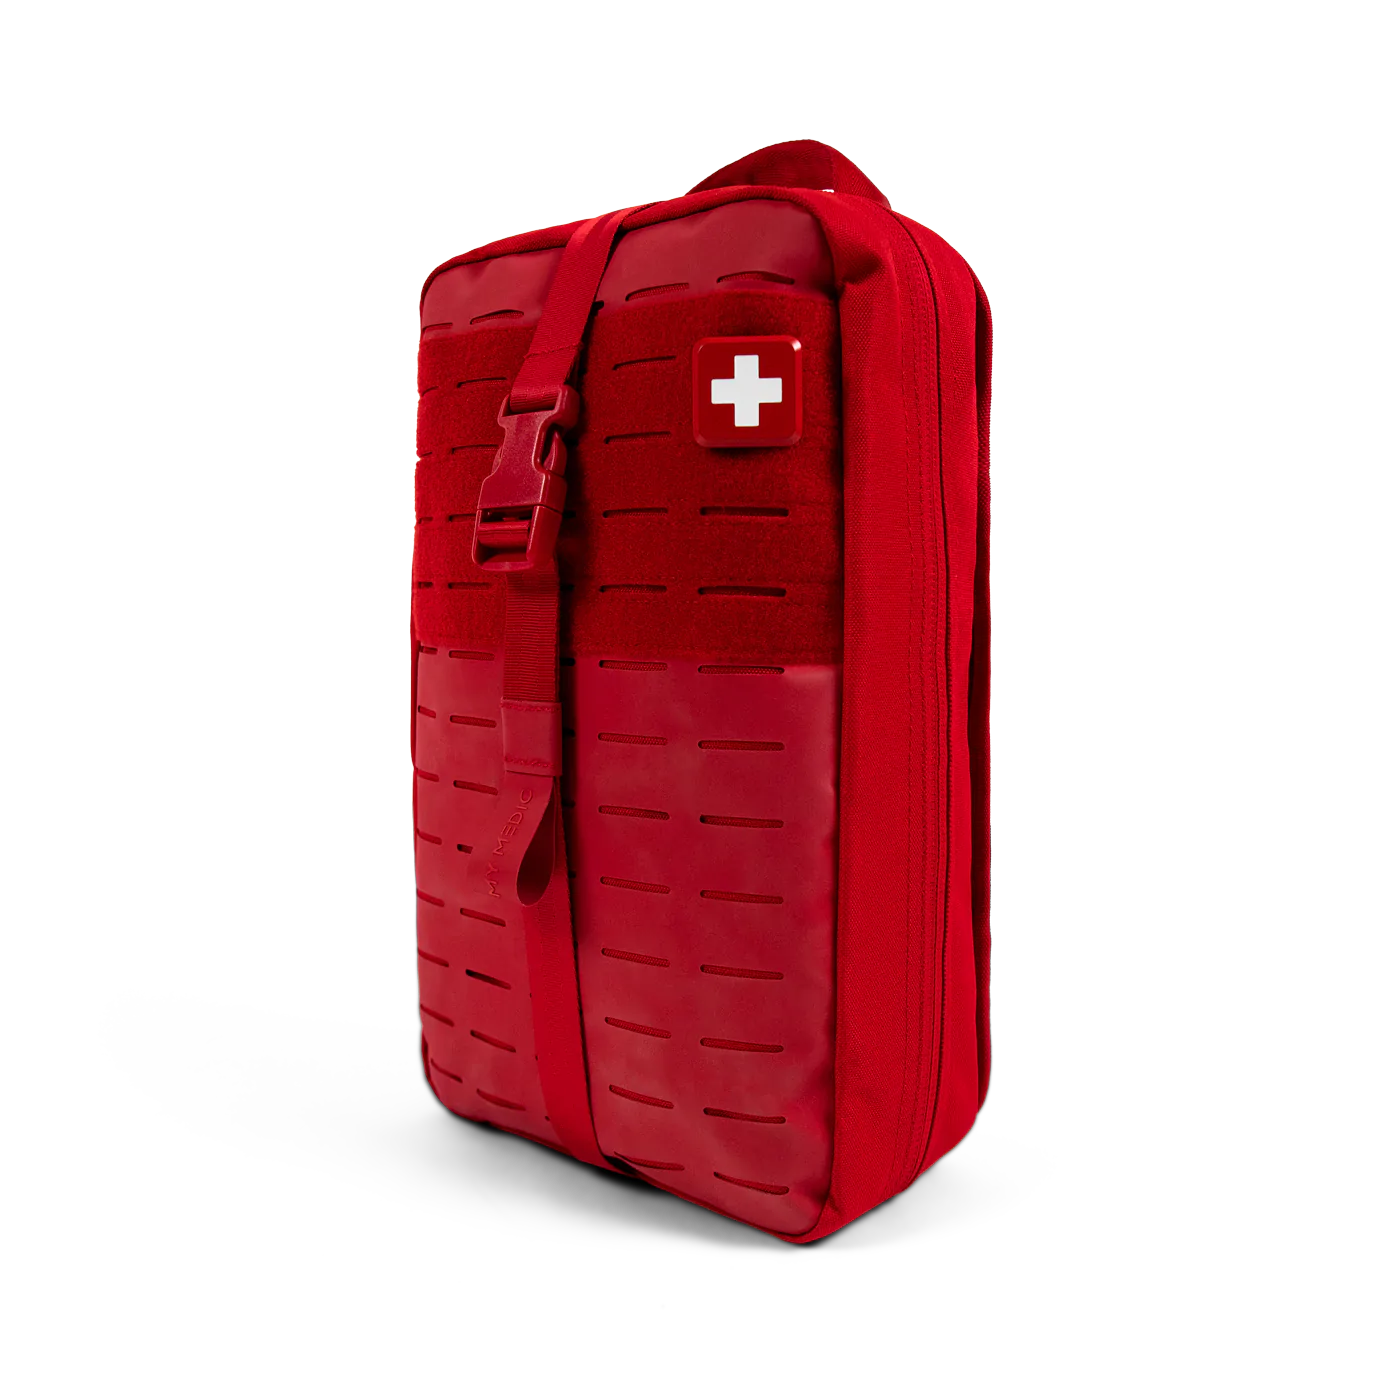 MyFAK Large - First Aid Kit